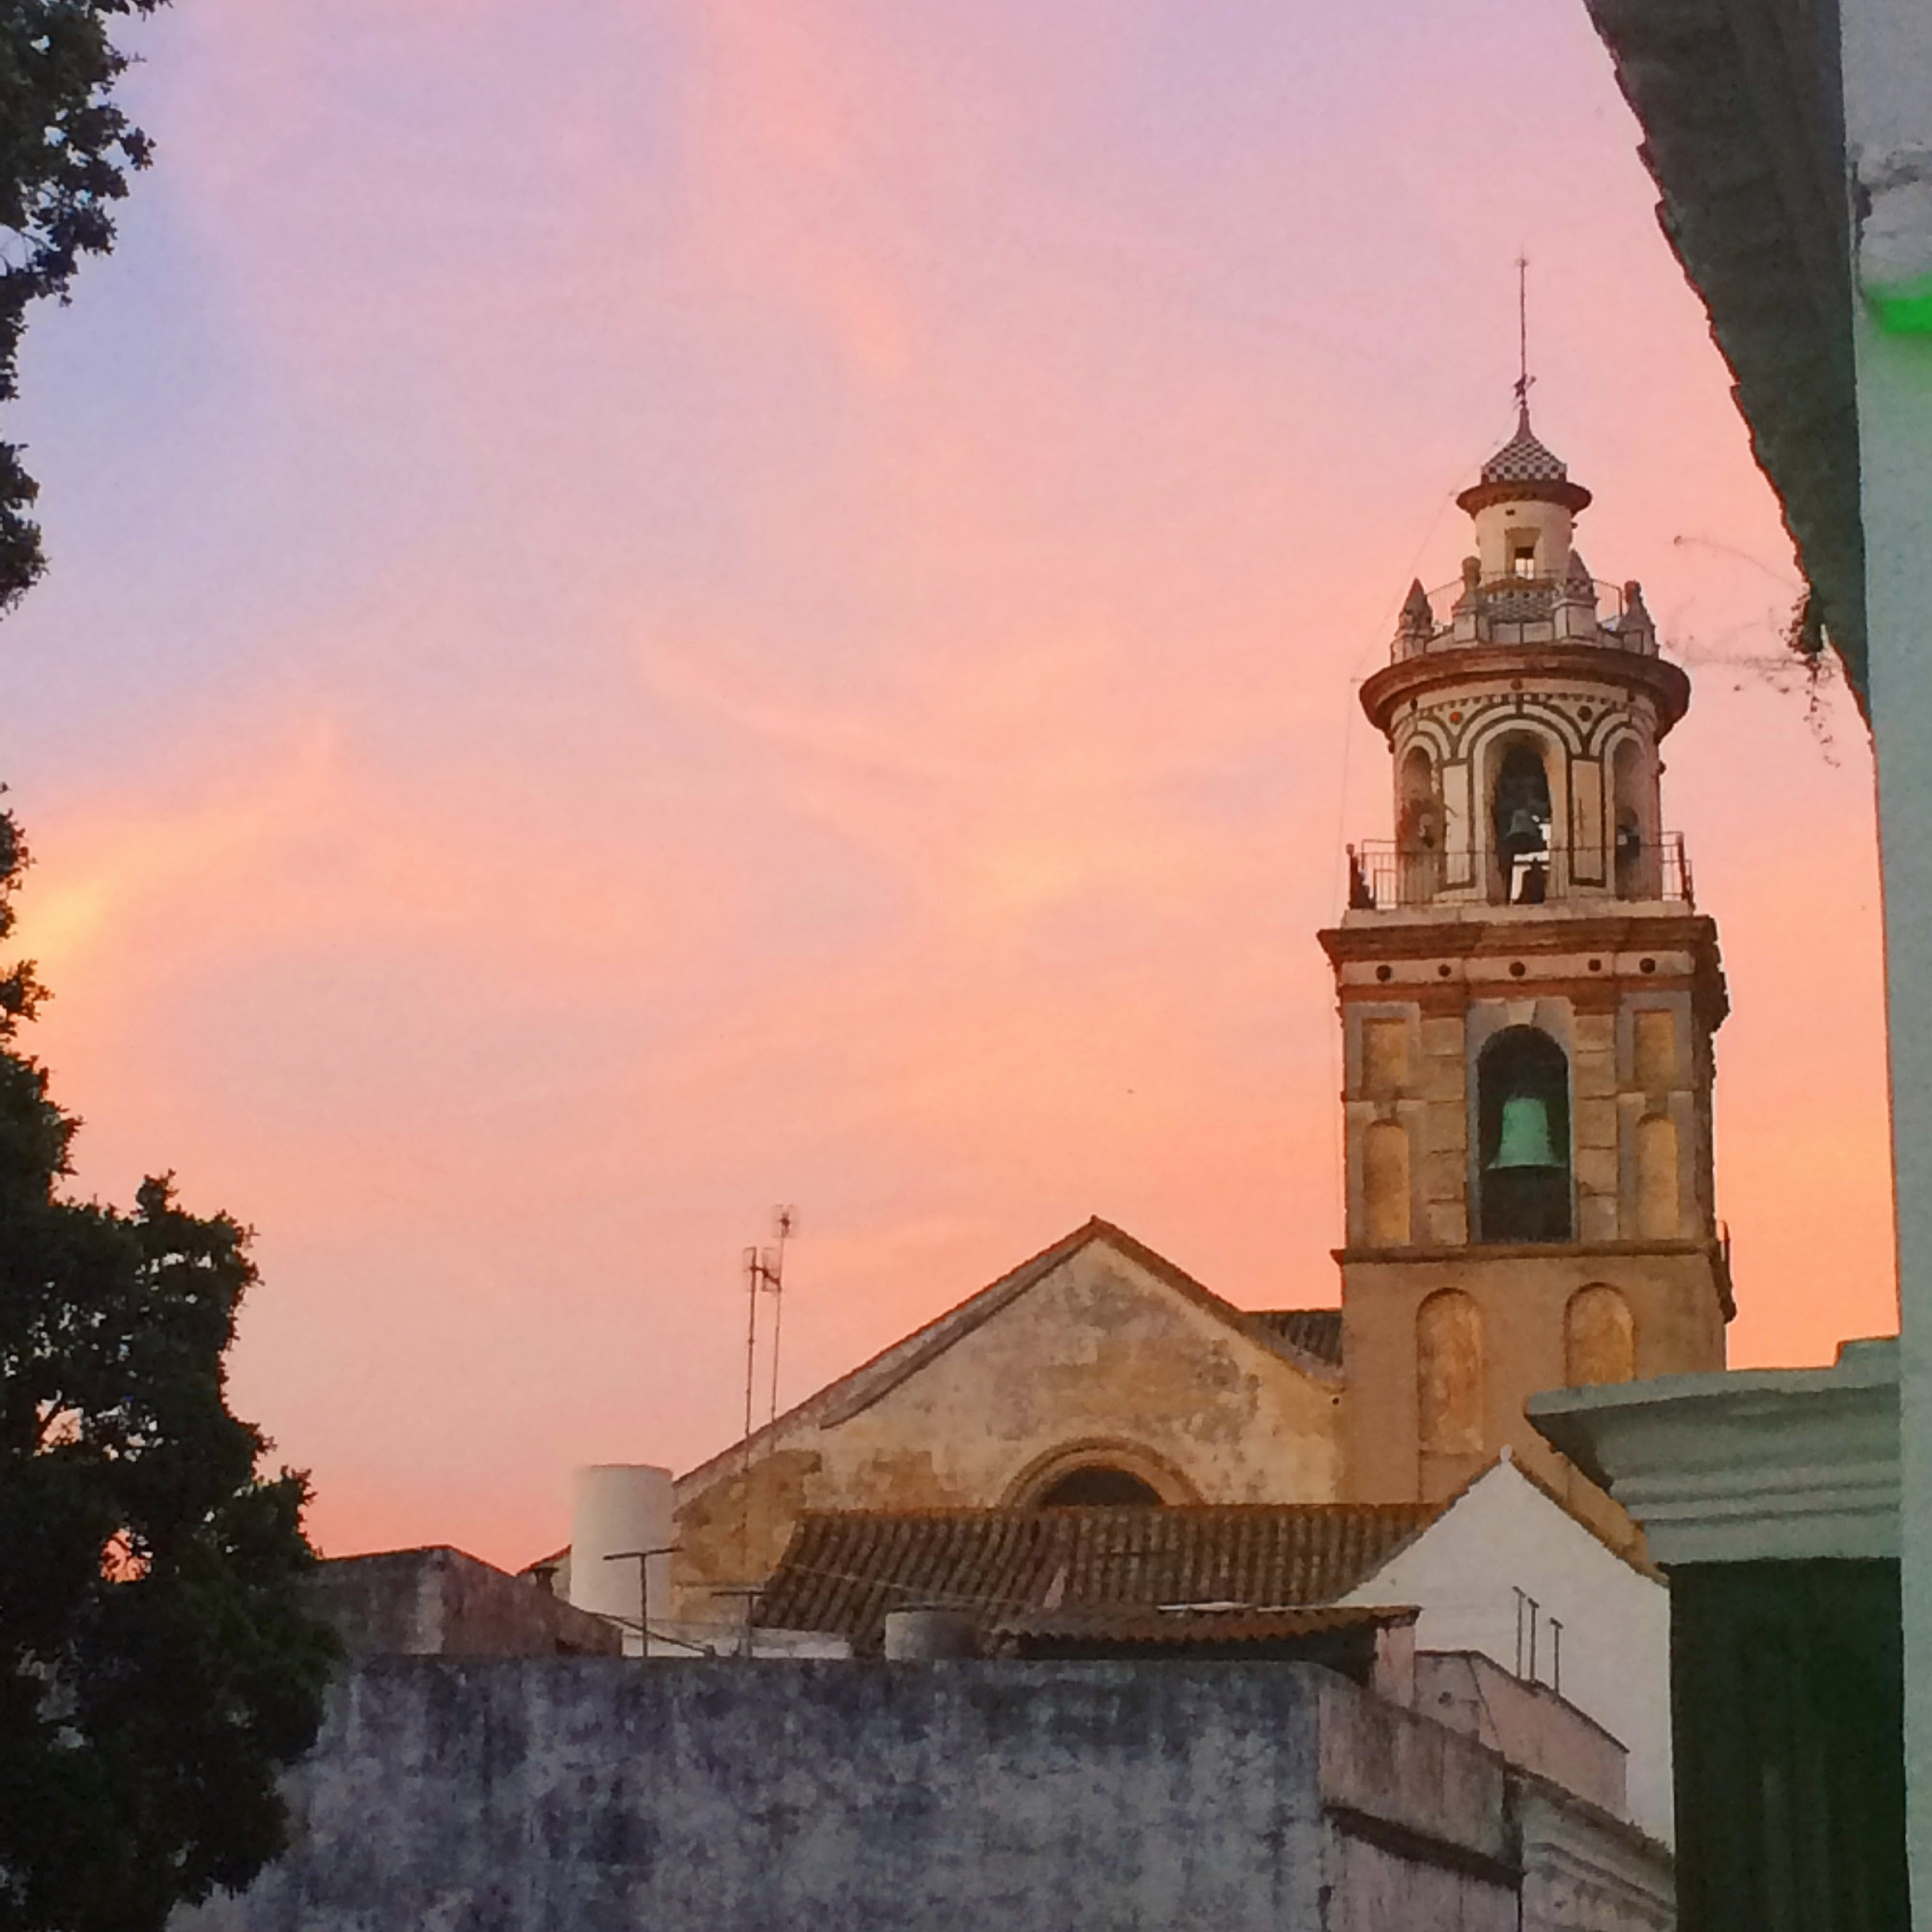 There are also beautiful churches all over town–like Nuestra Señora de la O—located just one block from the Castillo de Santiago.